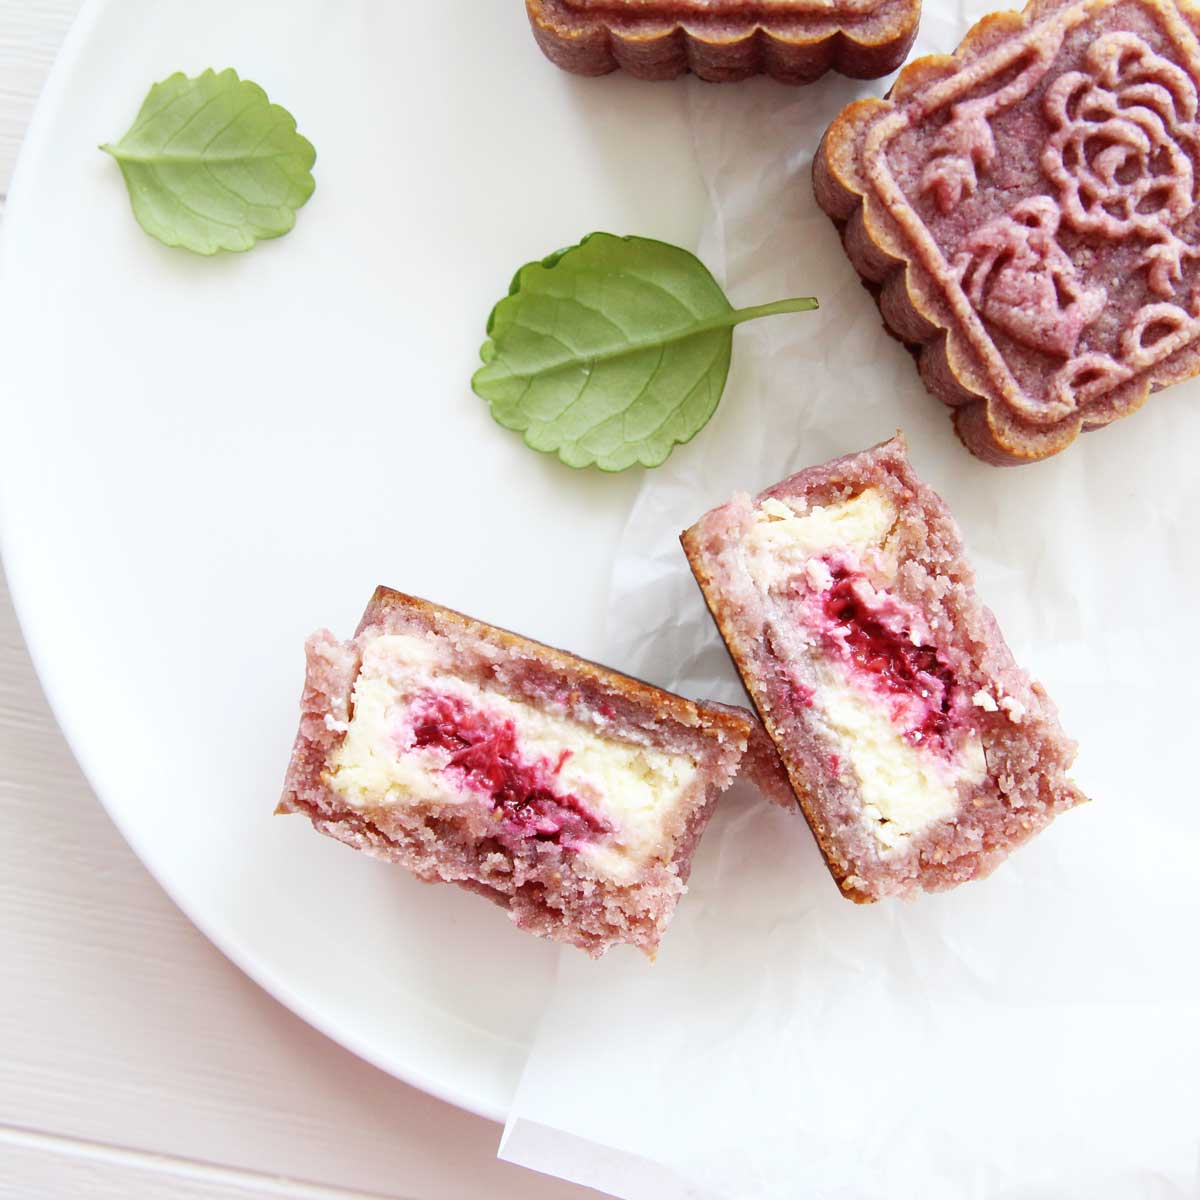 Sweet Raspberry Cheesecake Mooncakes Recipe (Simple, Gluten Free) - Walnut Butter Mooncakes